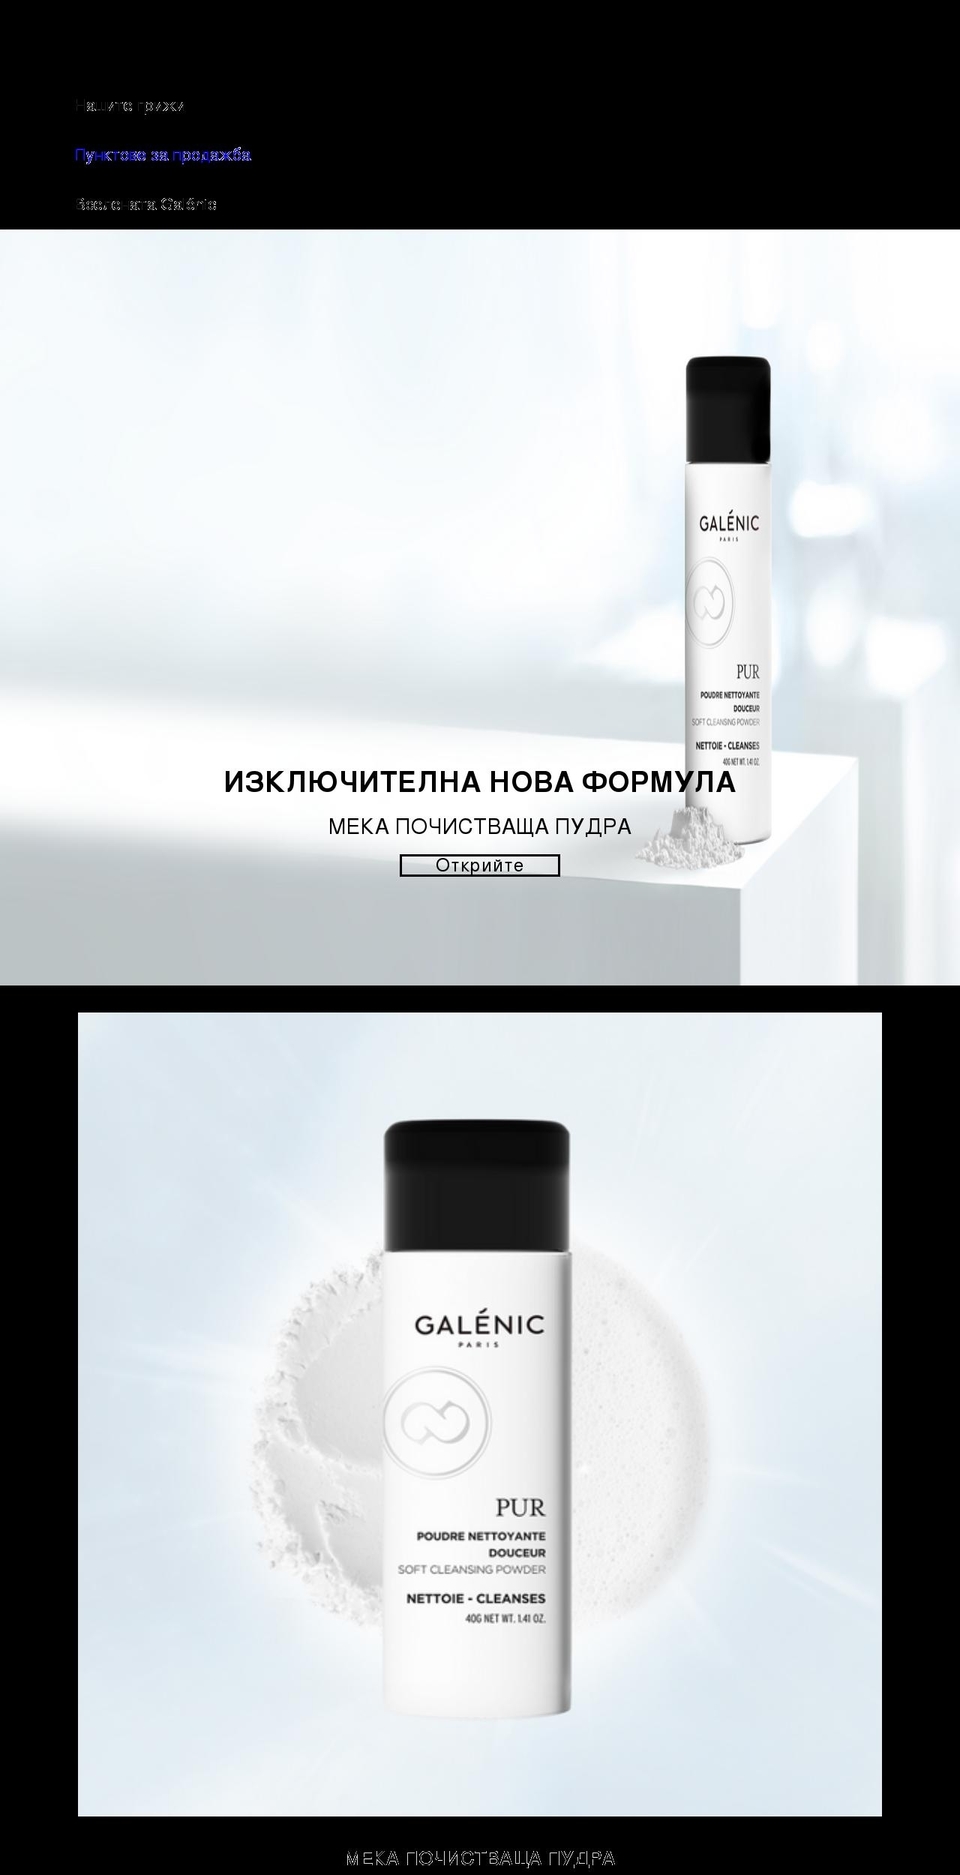 galenic.bg shopify website screenshot